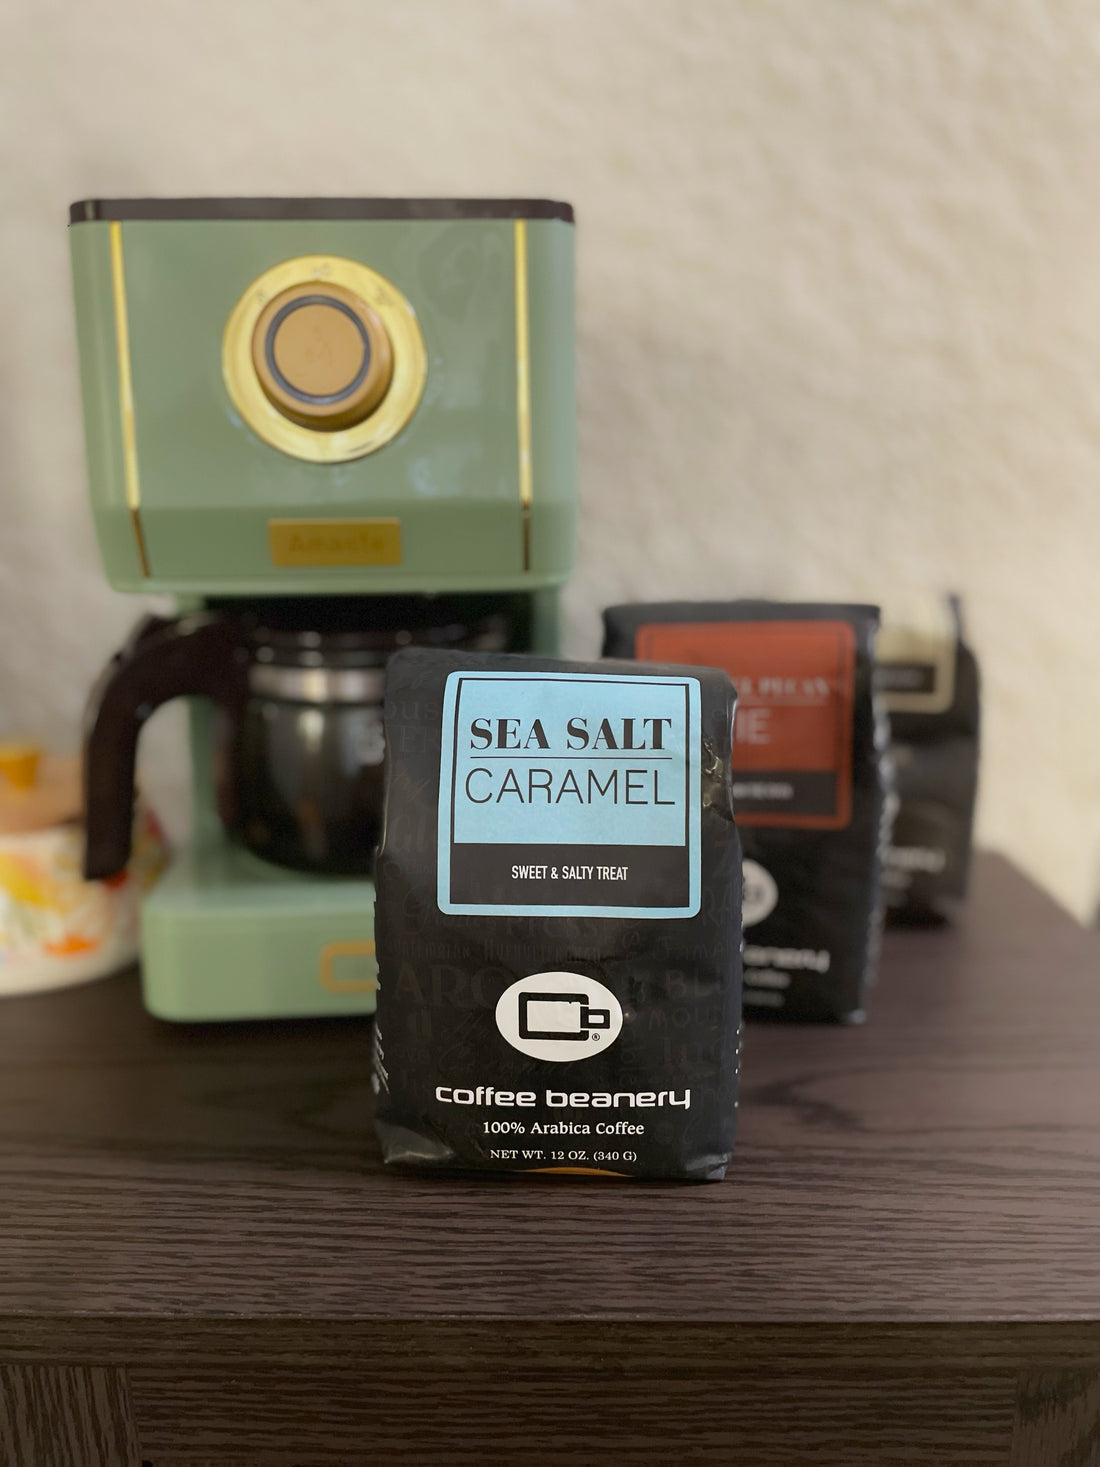 Sea Salt Caramel Flavored Coffee: A Sweet & Salty Delight!